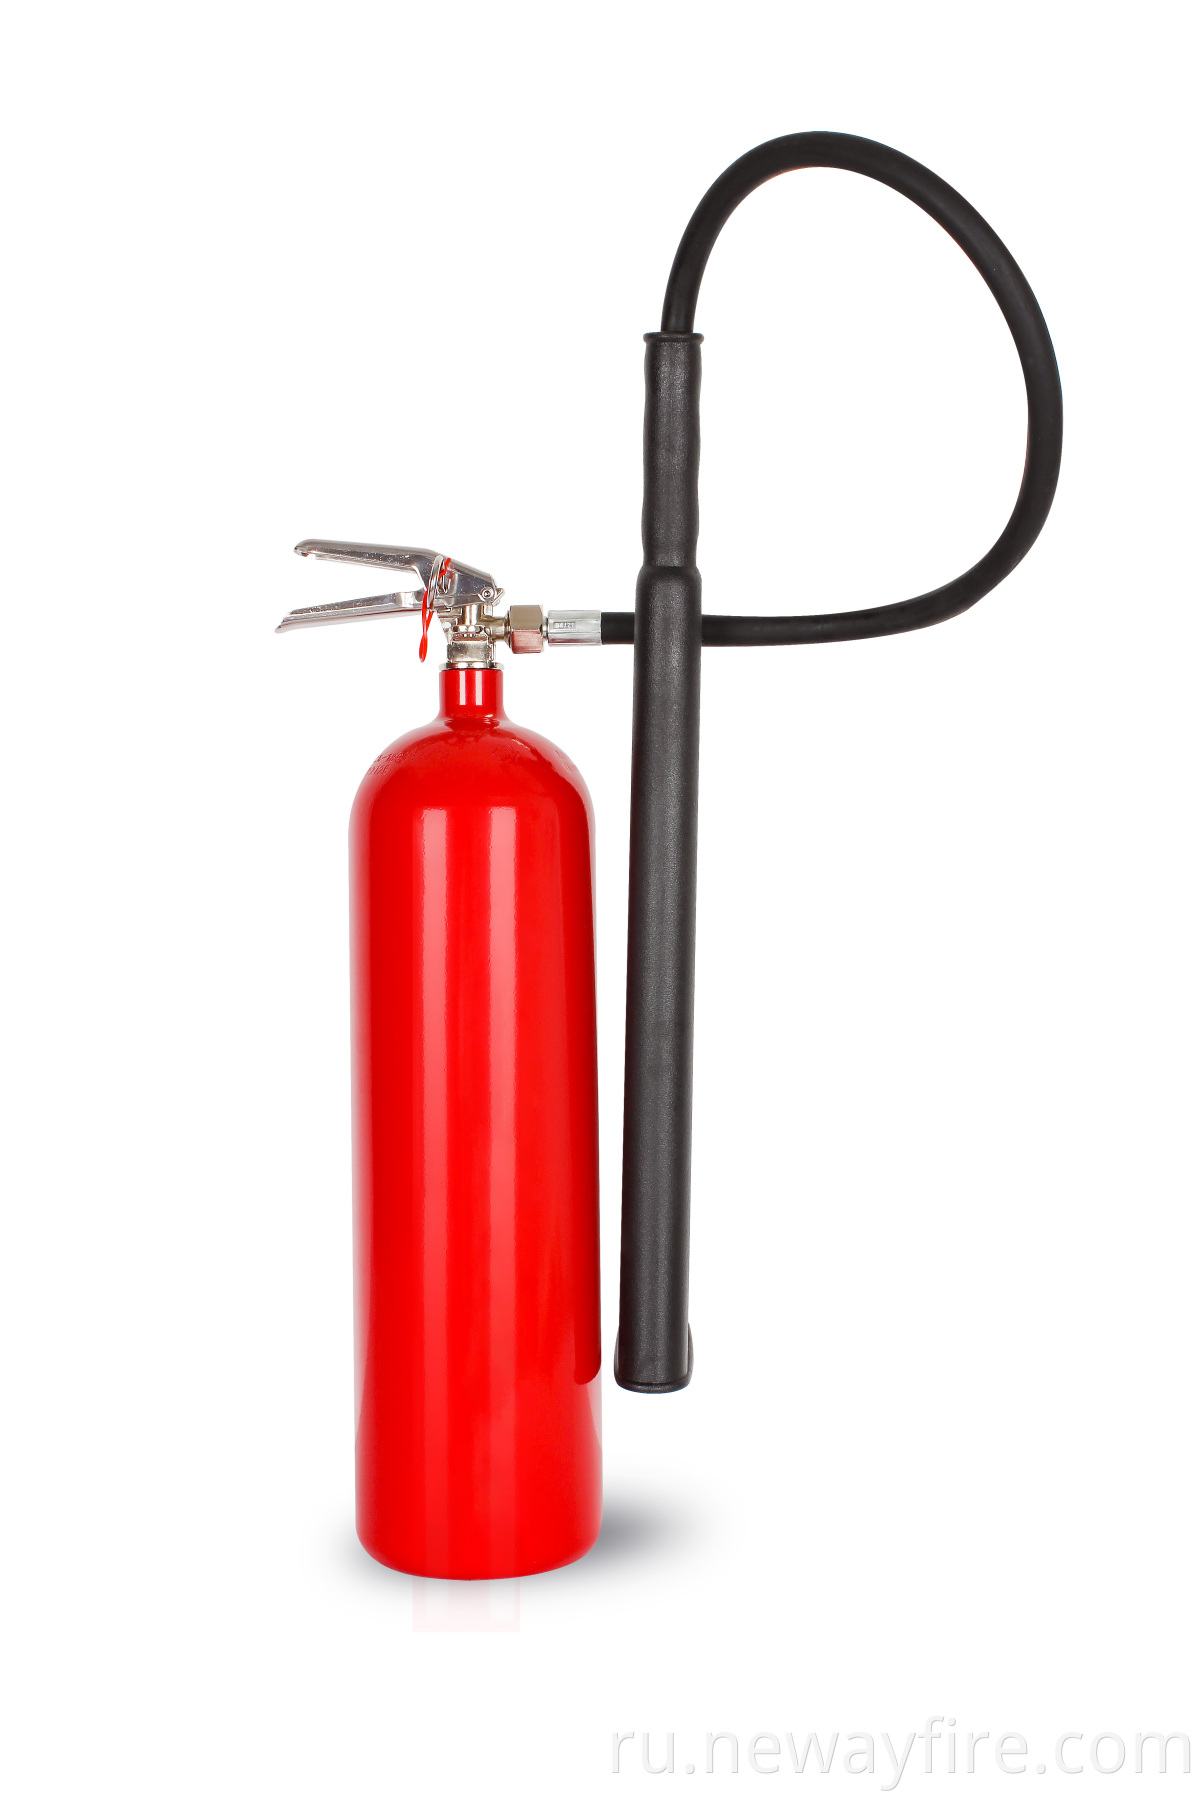 2kg CO2 Portable fire extinguisher Aluminium alloy